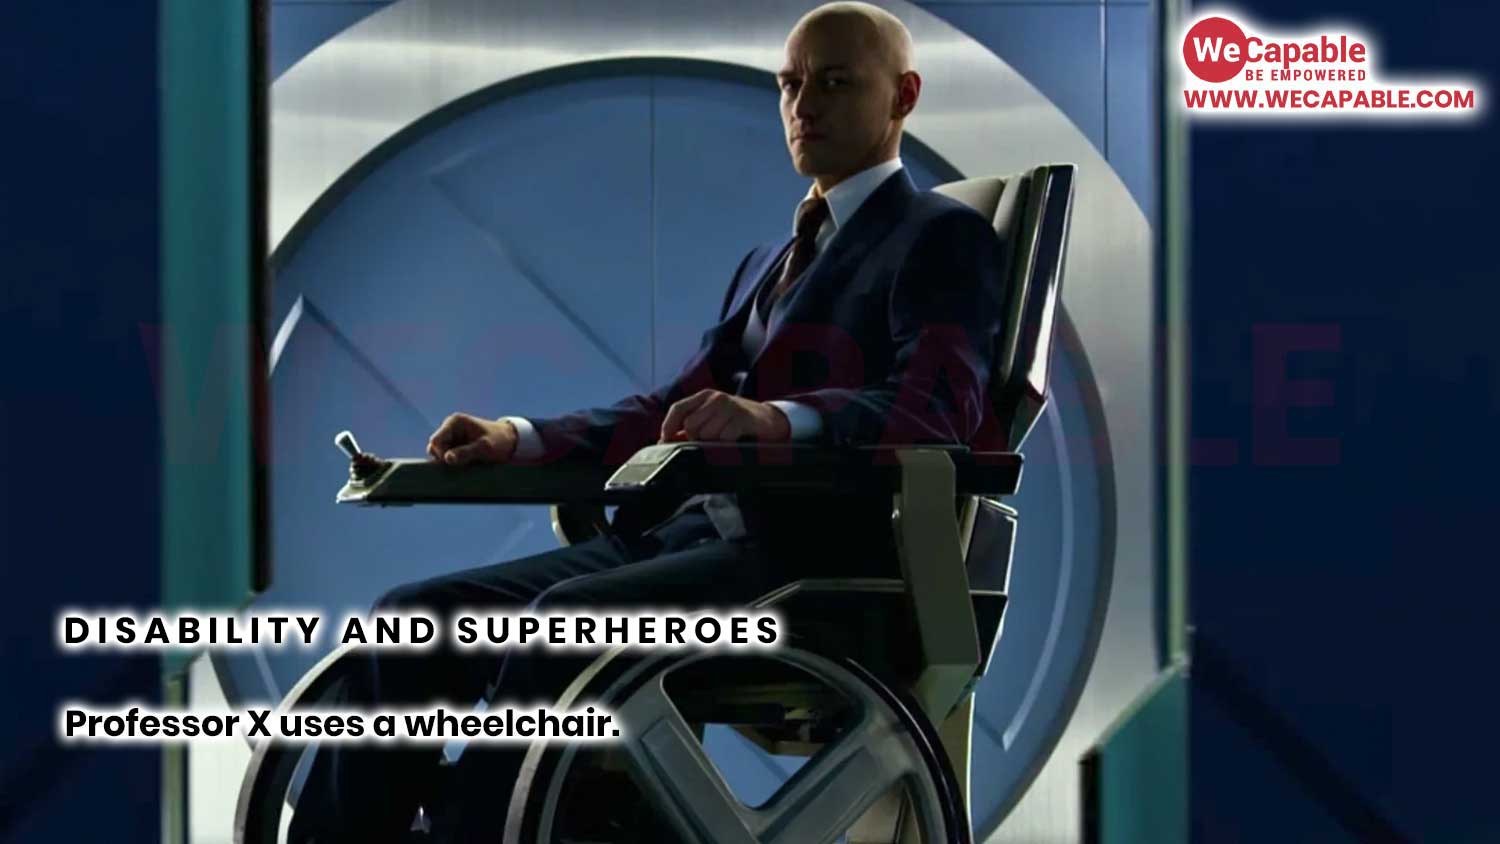 Superhero Professor X has a disability. He uses a wheelchair.